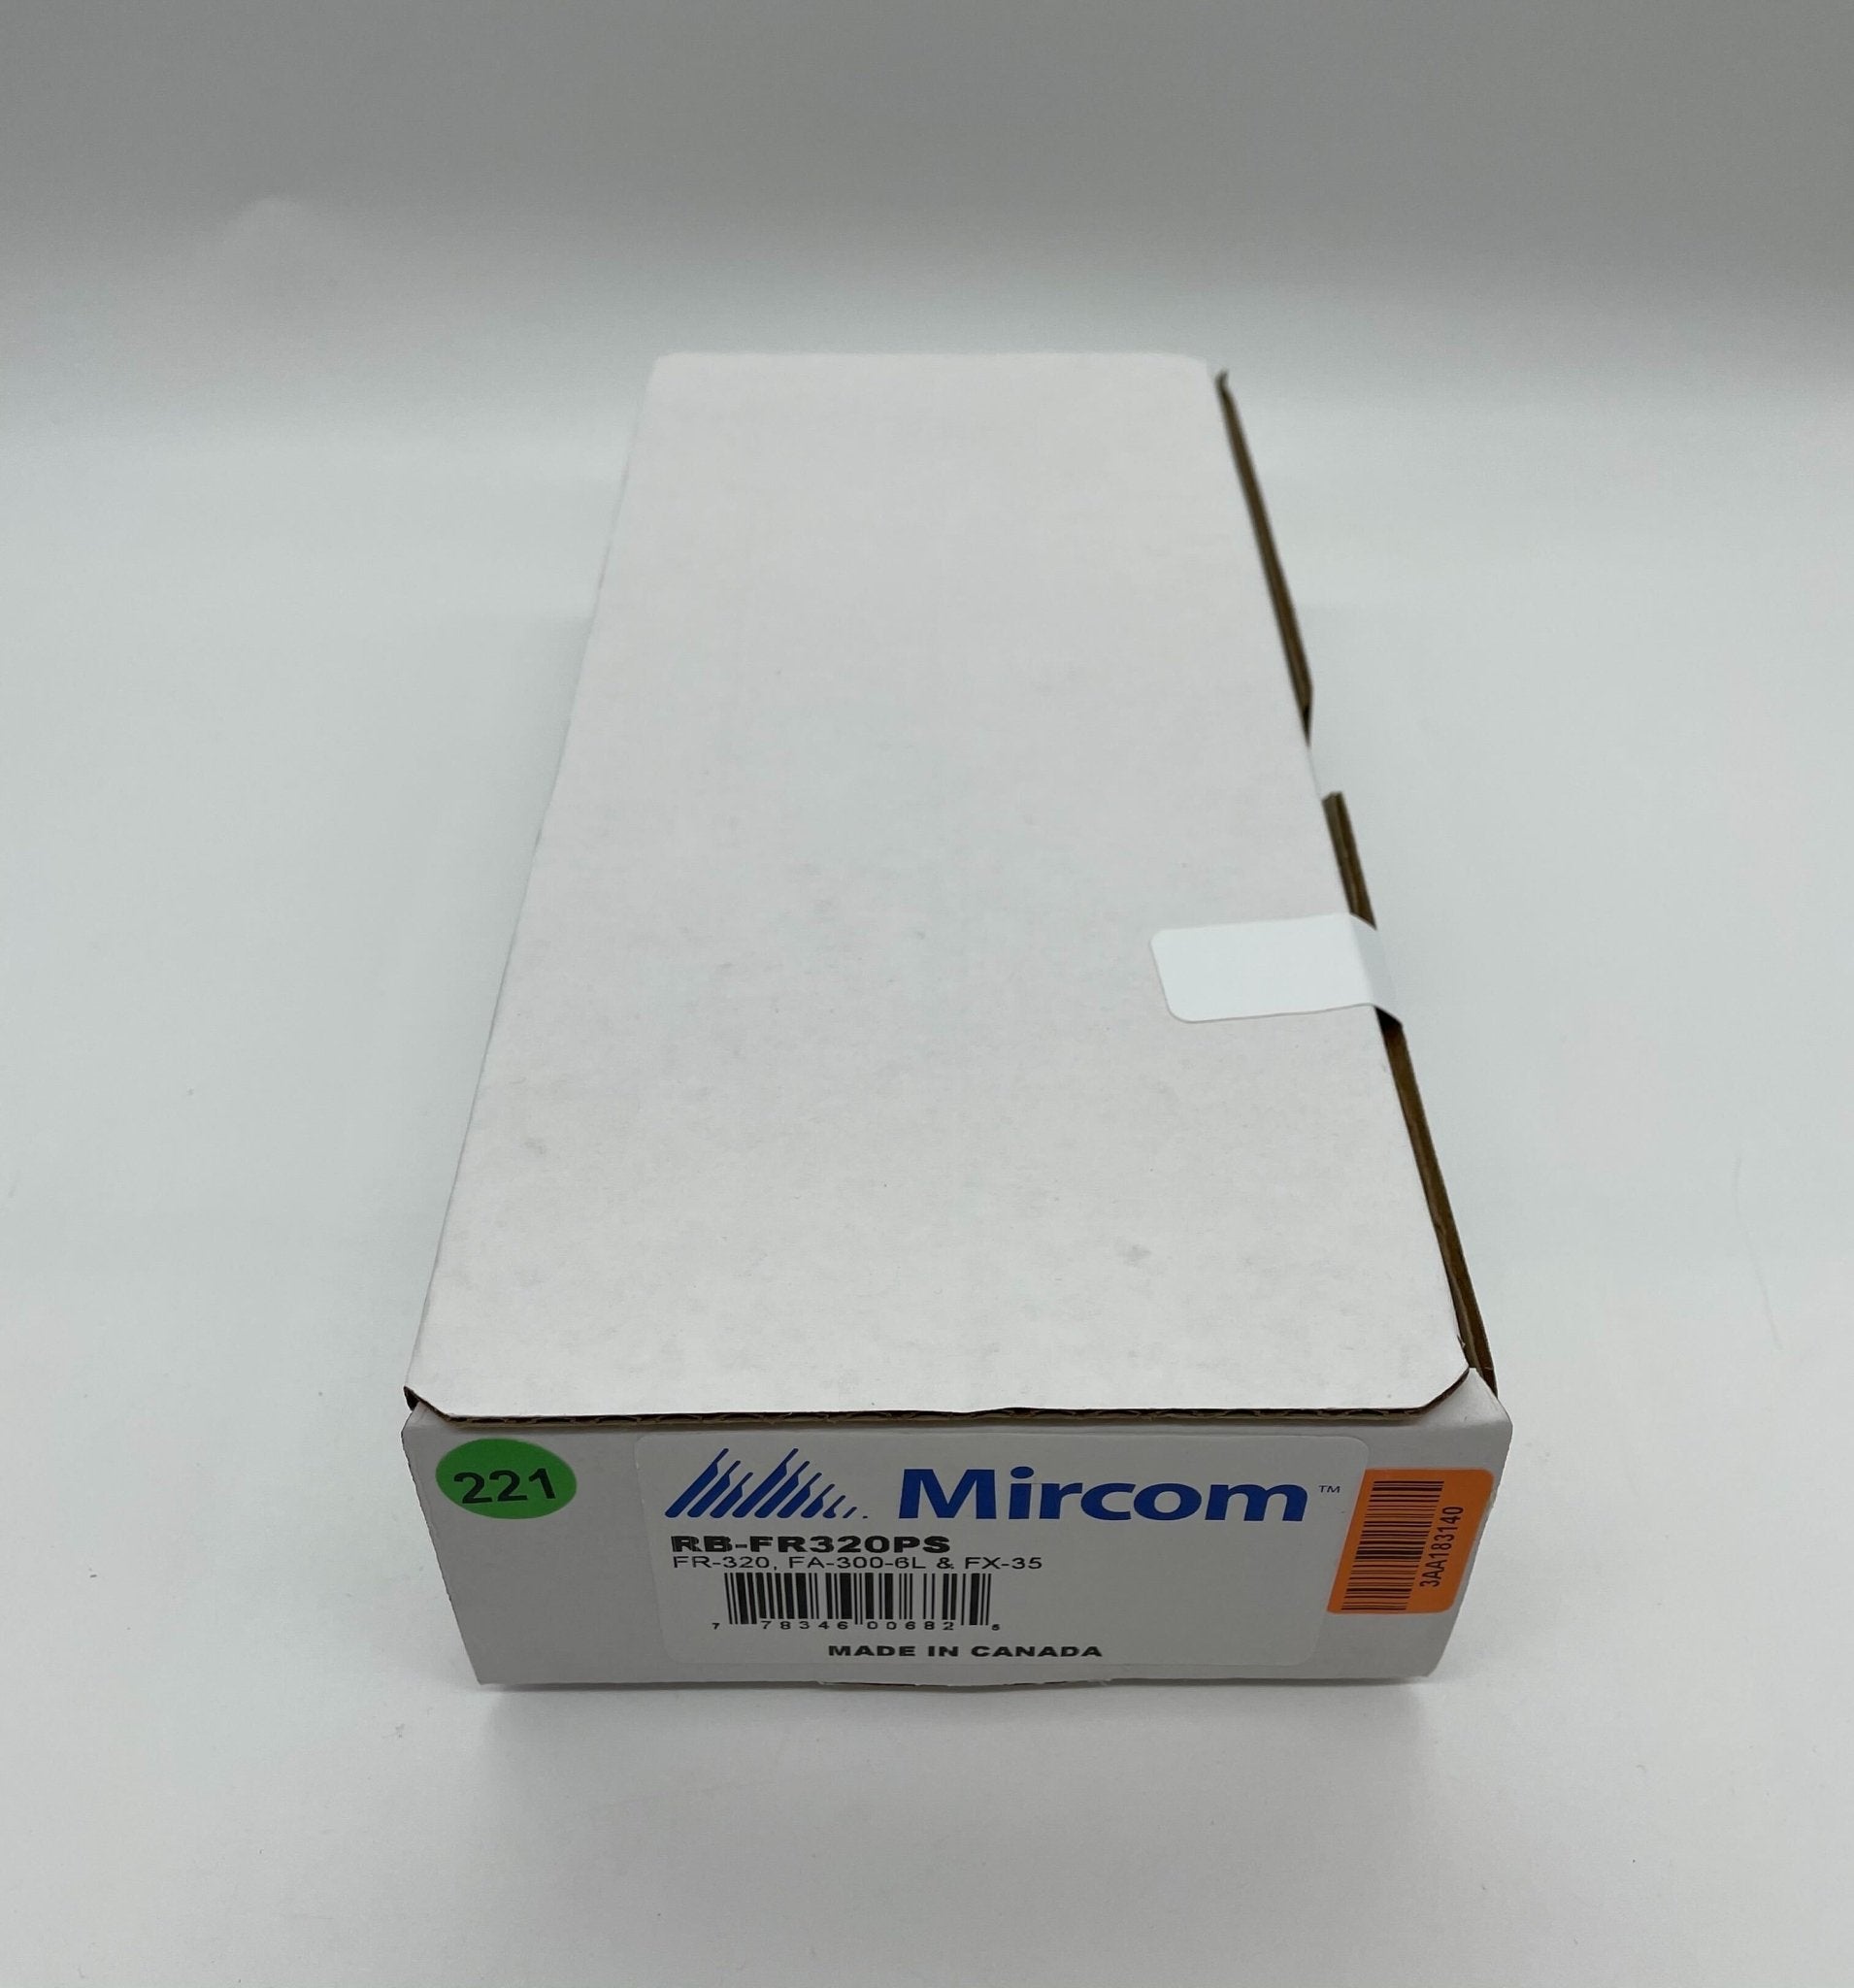 Mircom RB-FR320PS - The Fire Alarm Supplier